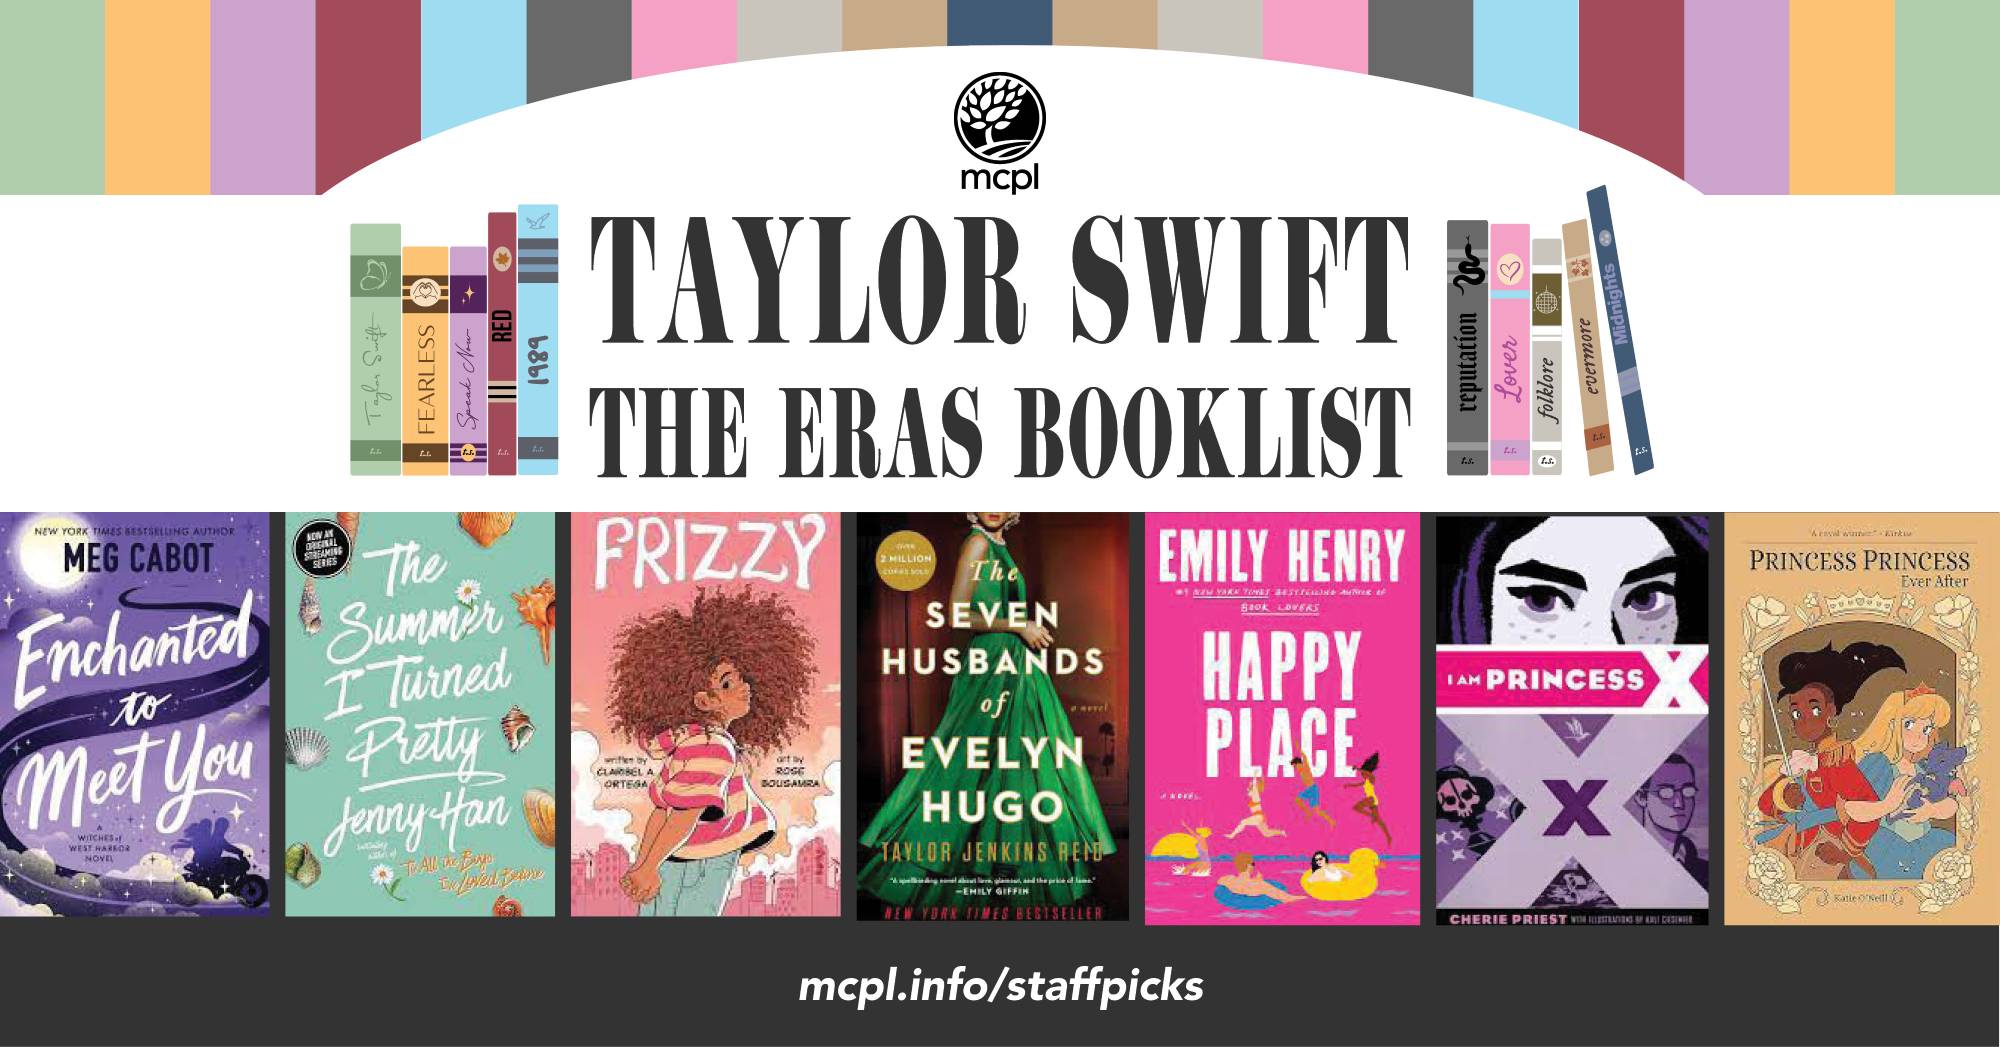 Taylor Swift: The Eras Booklist